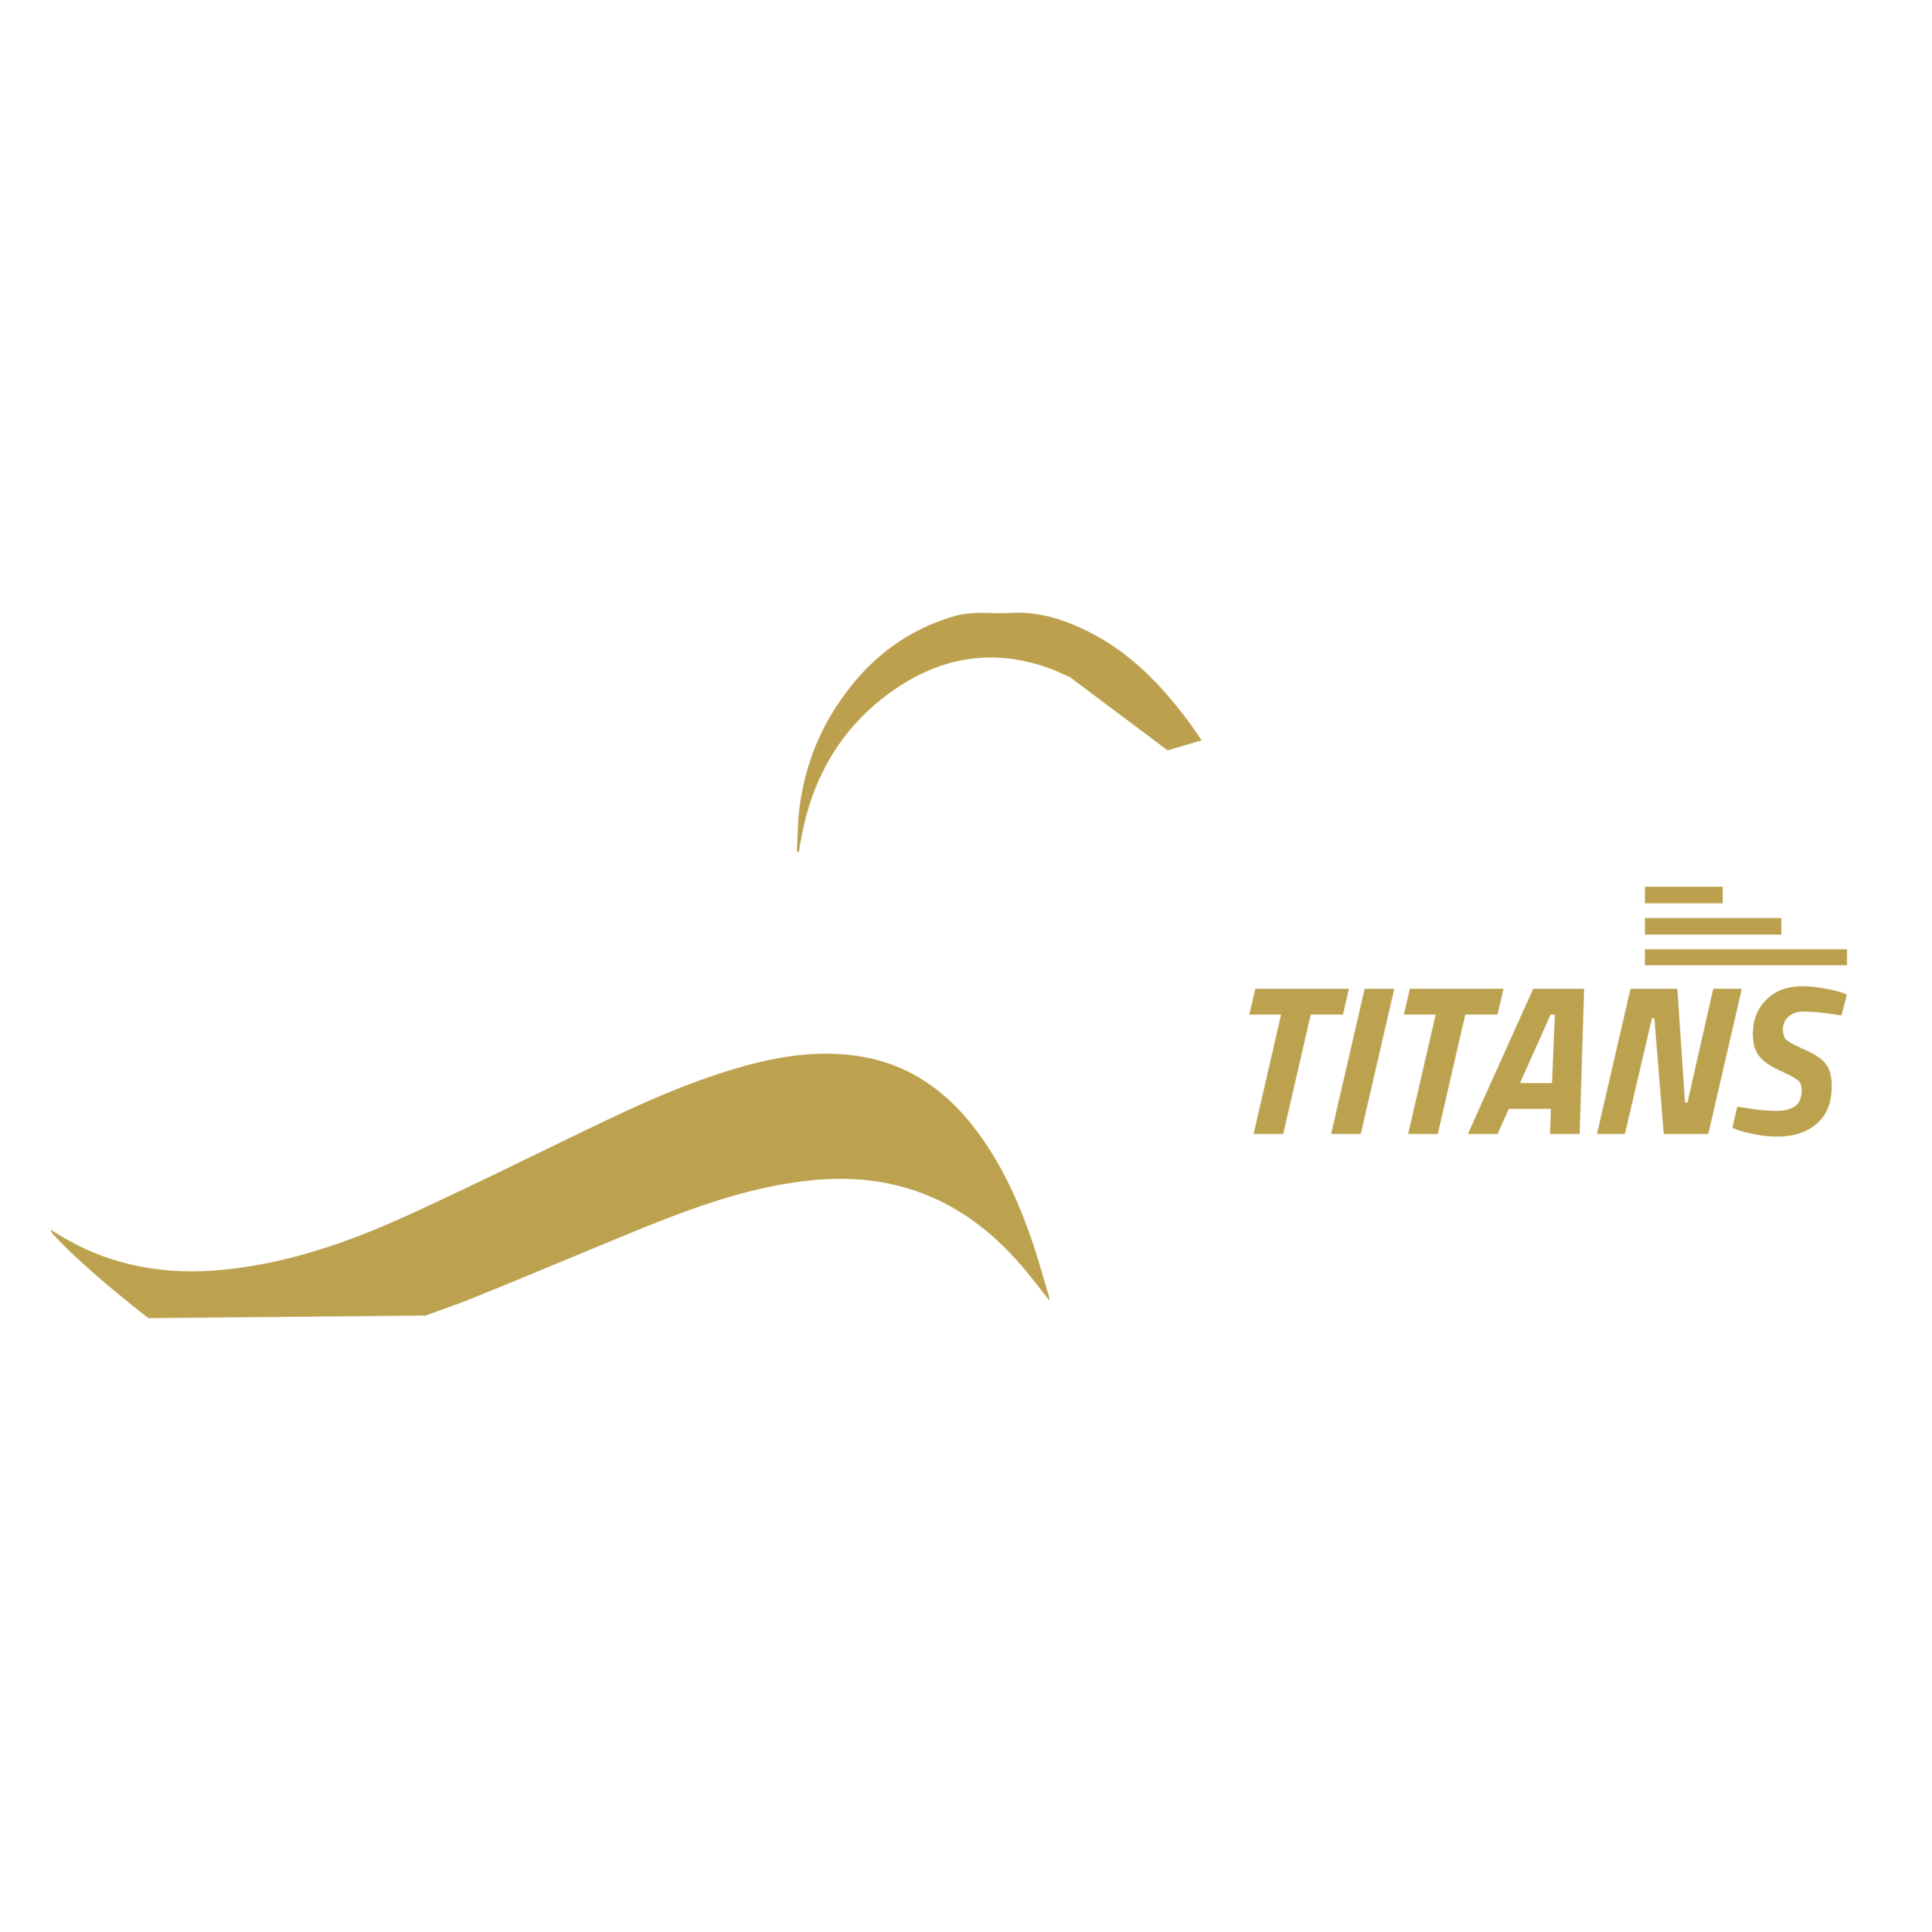 Trading Titans Ltd